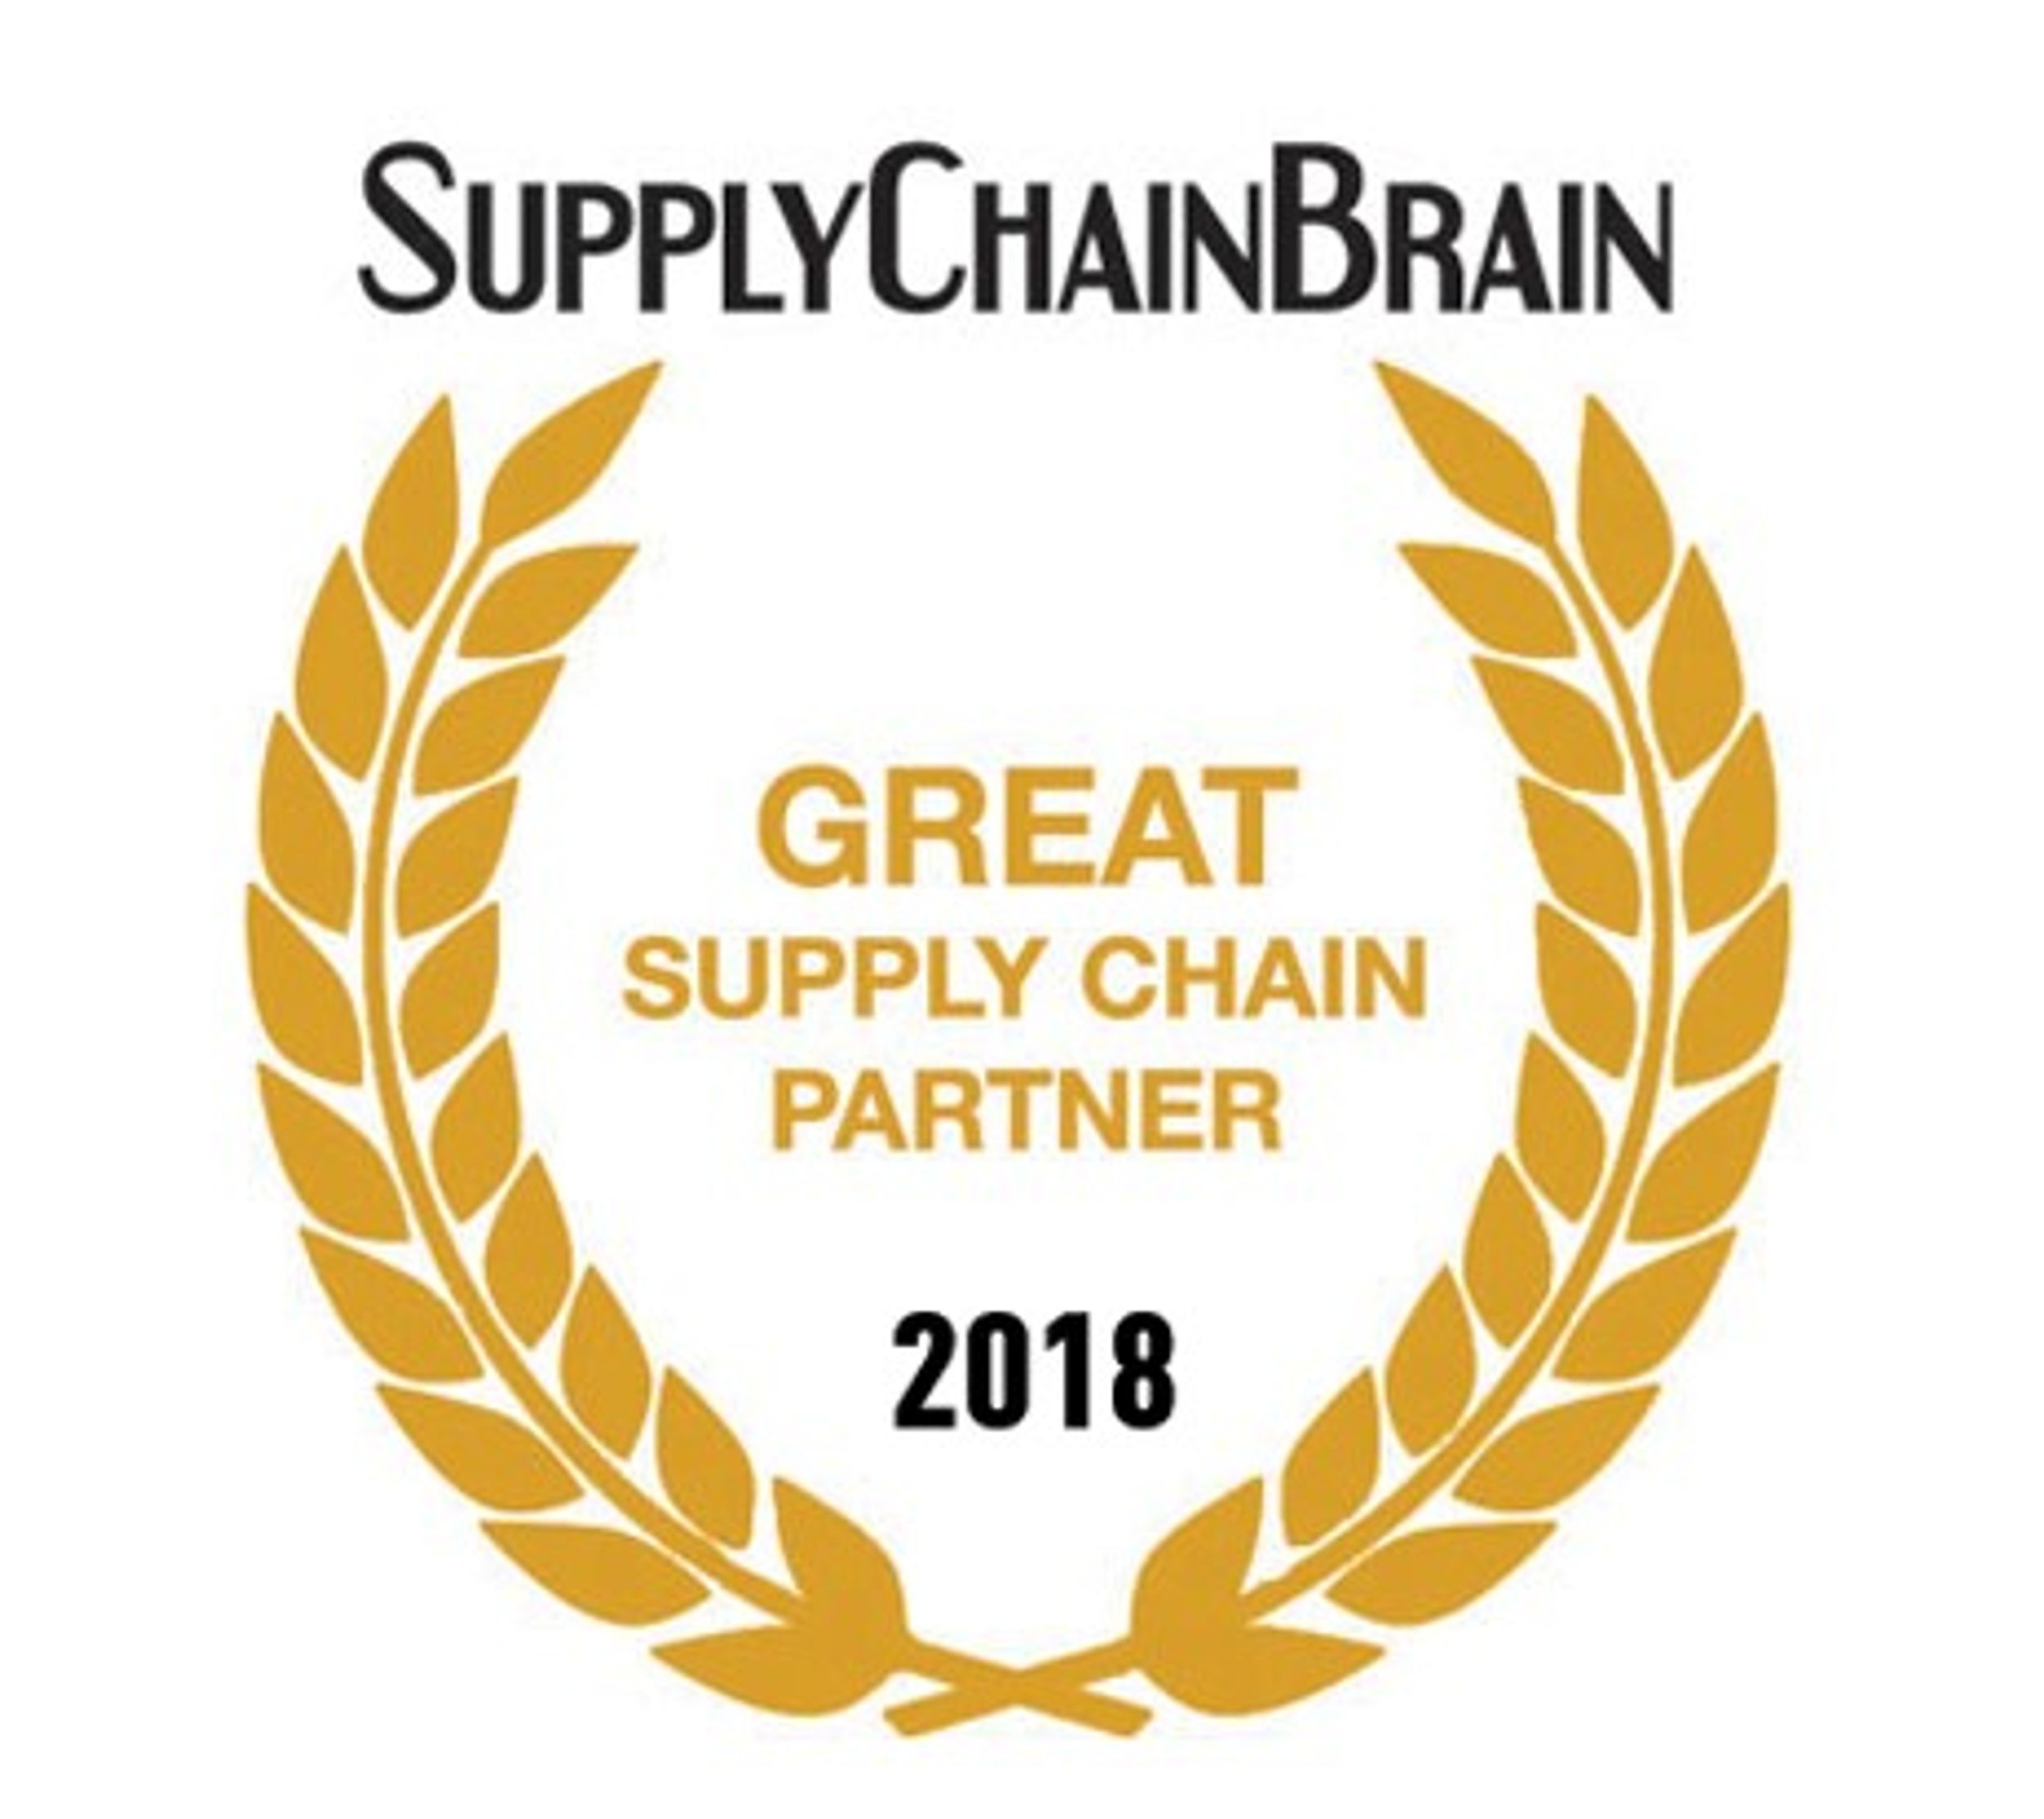 Penske Logistics is a SupplyChainBrain 2018 Great Supply Chain Partner